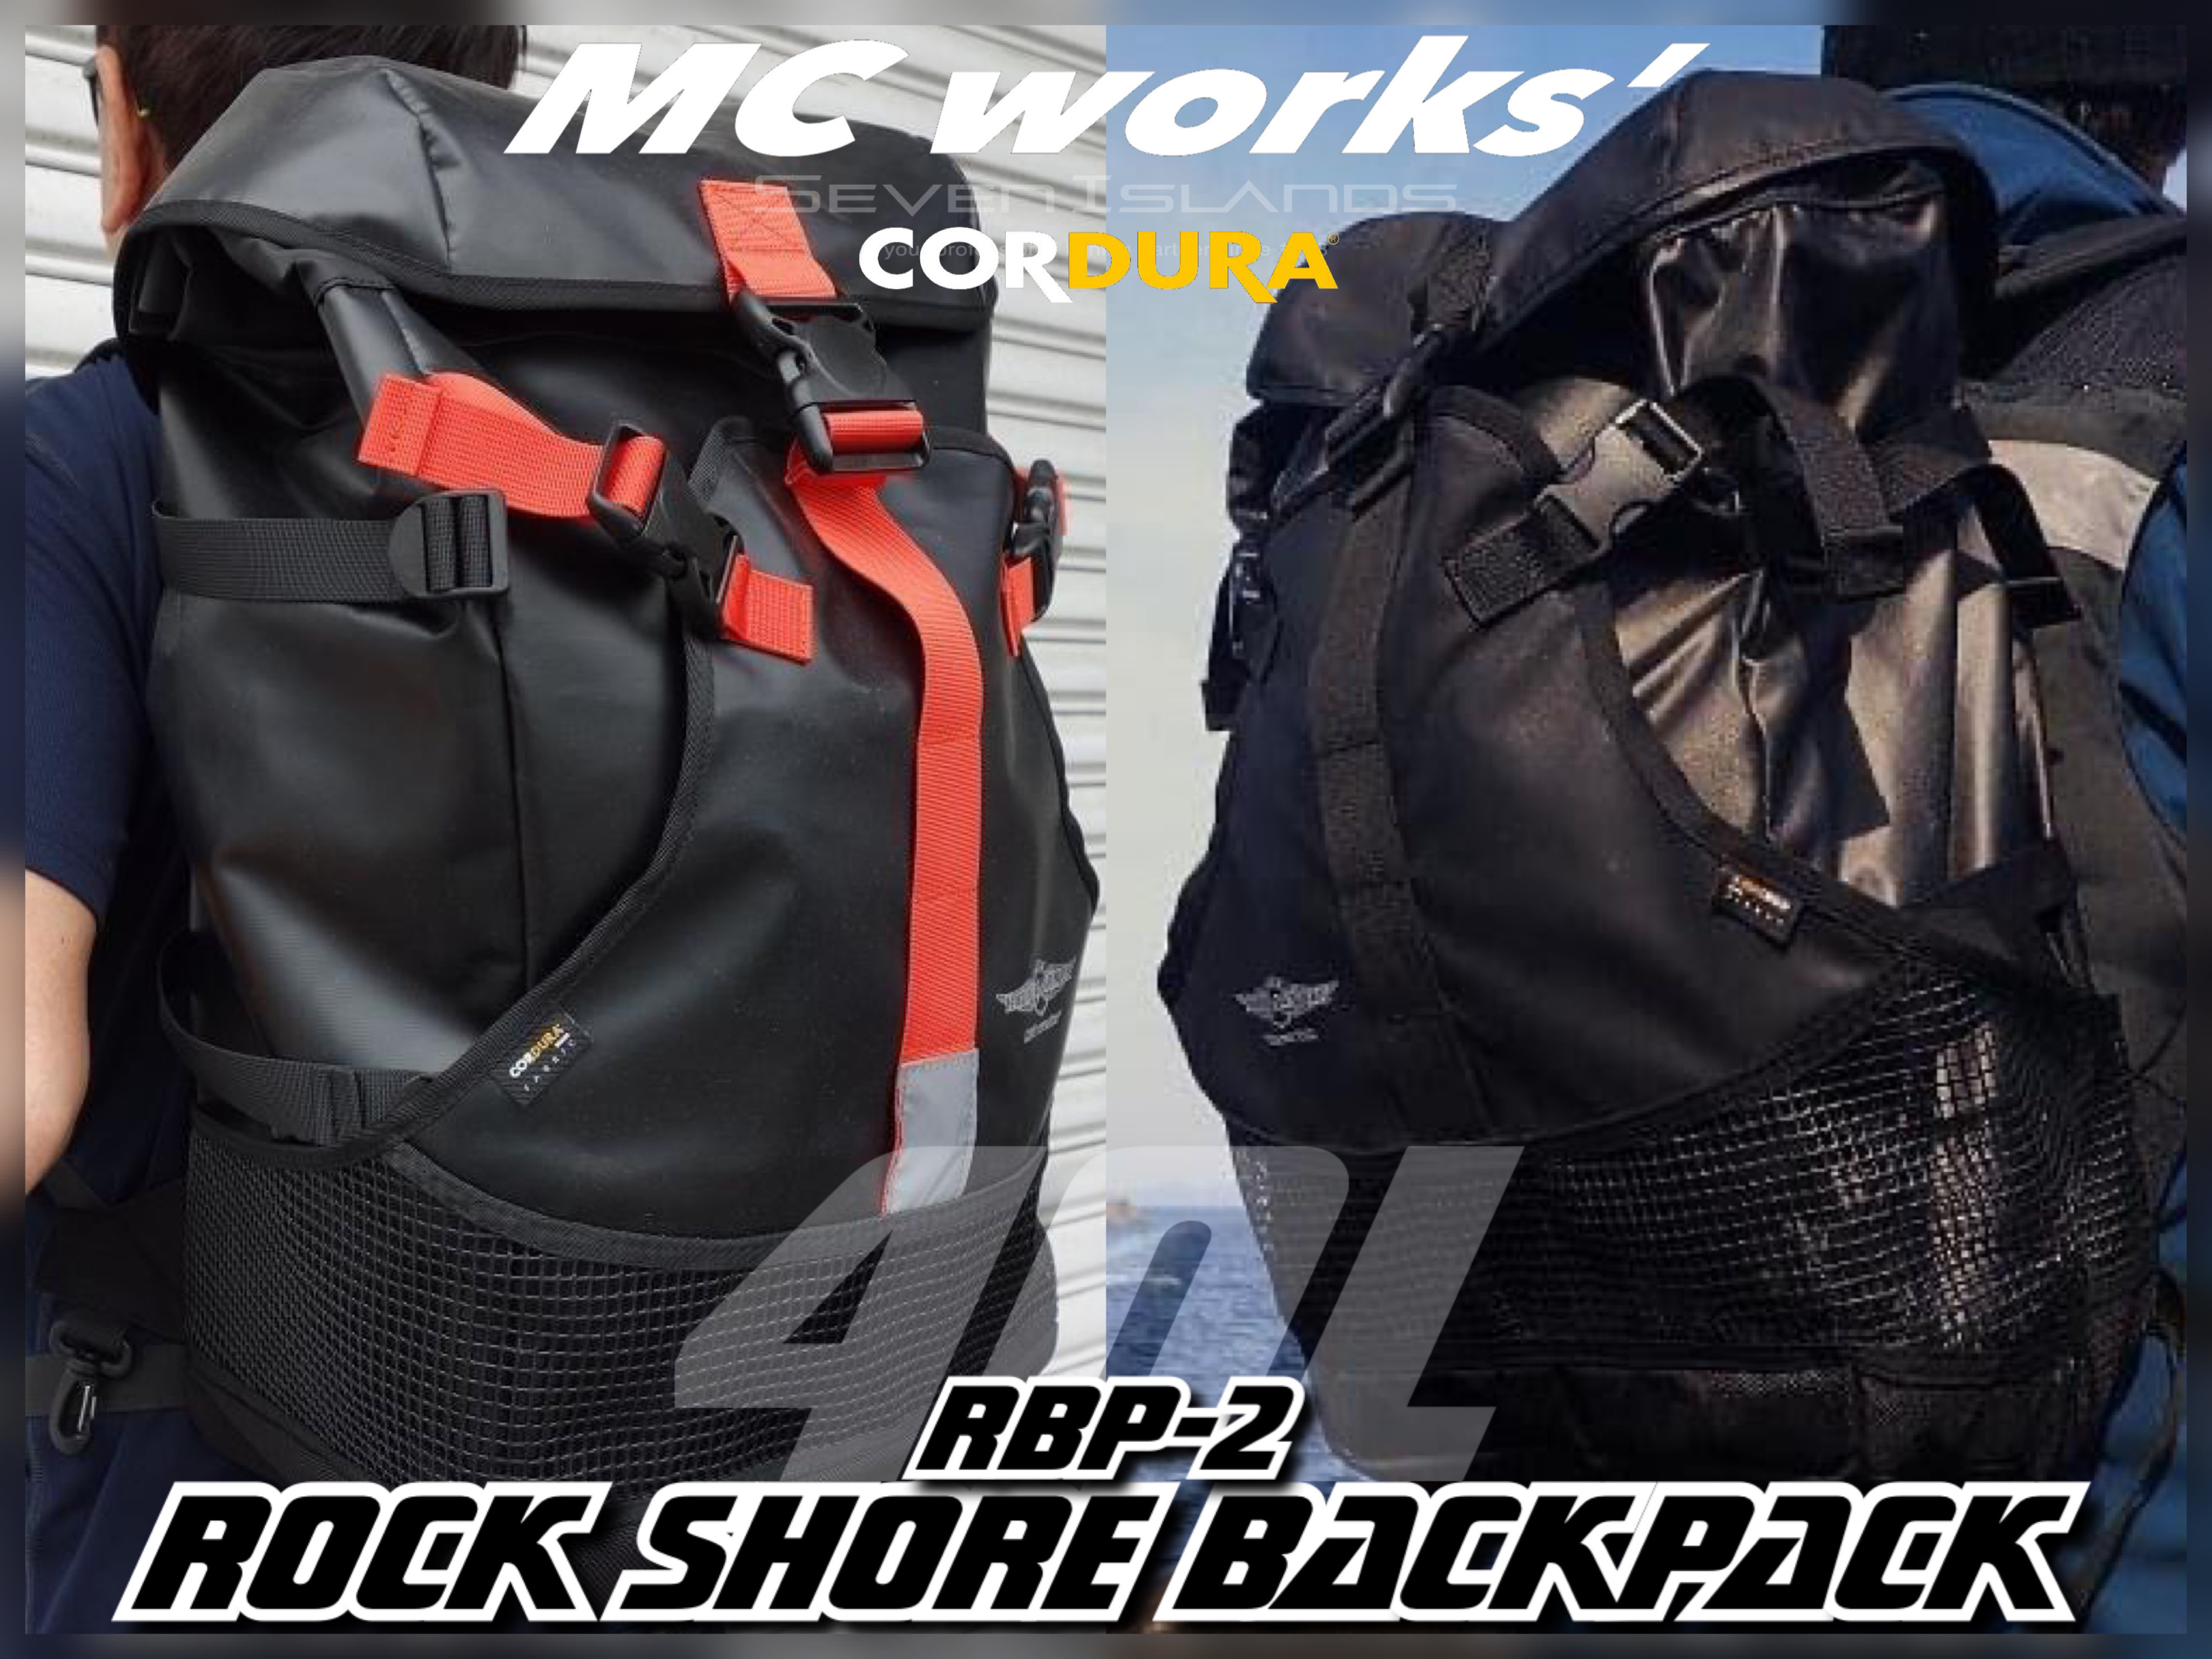 MC WORKS' RADICAL ARMOR ROCK SHORE BACKPACK RBP-2